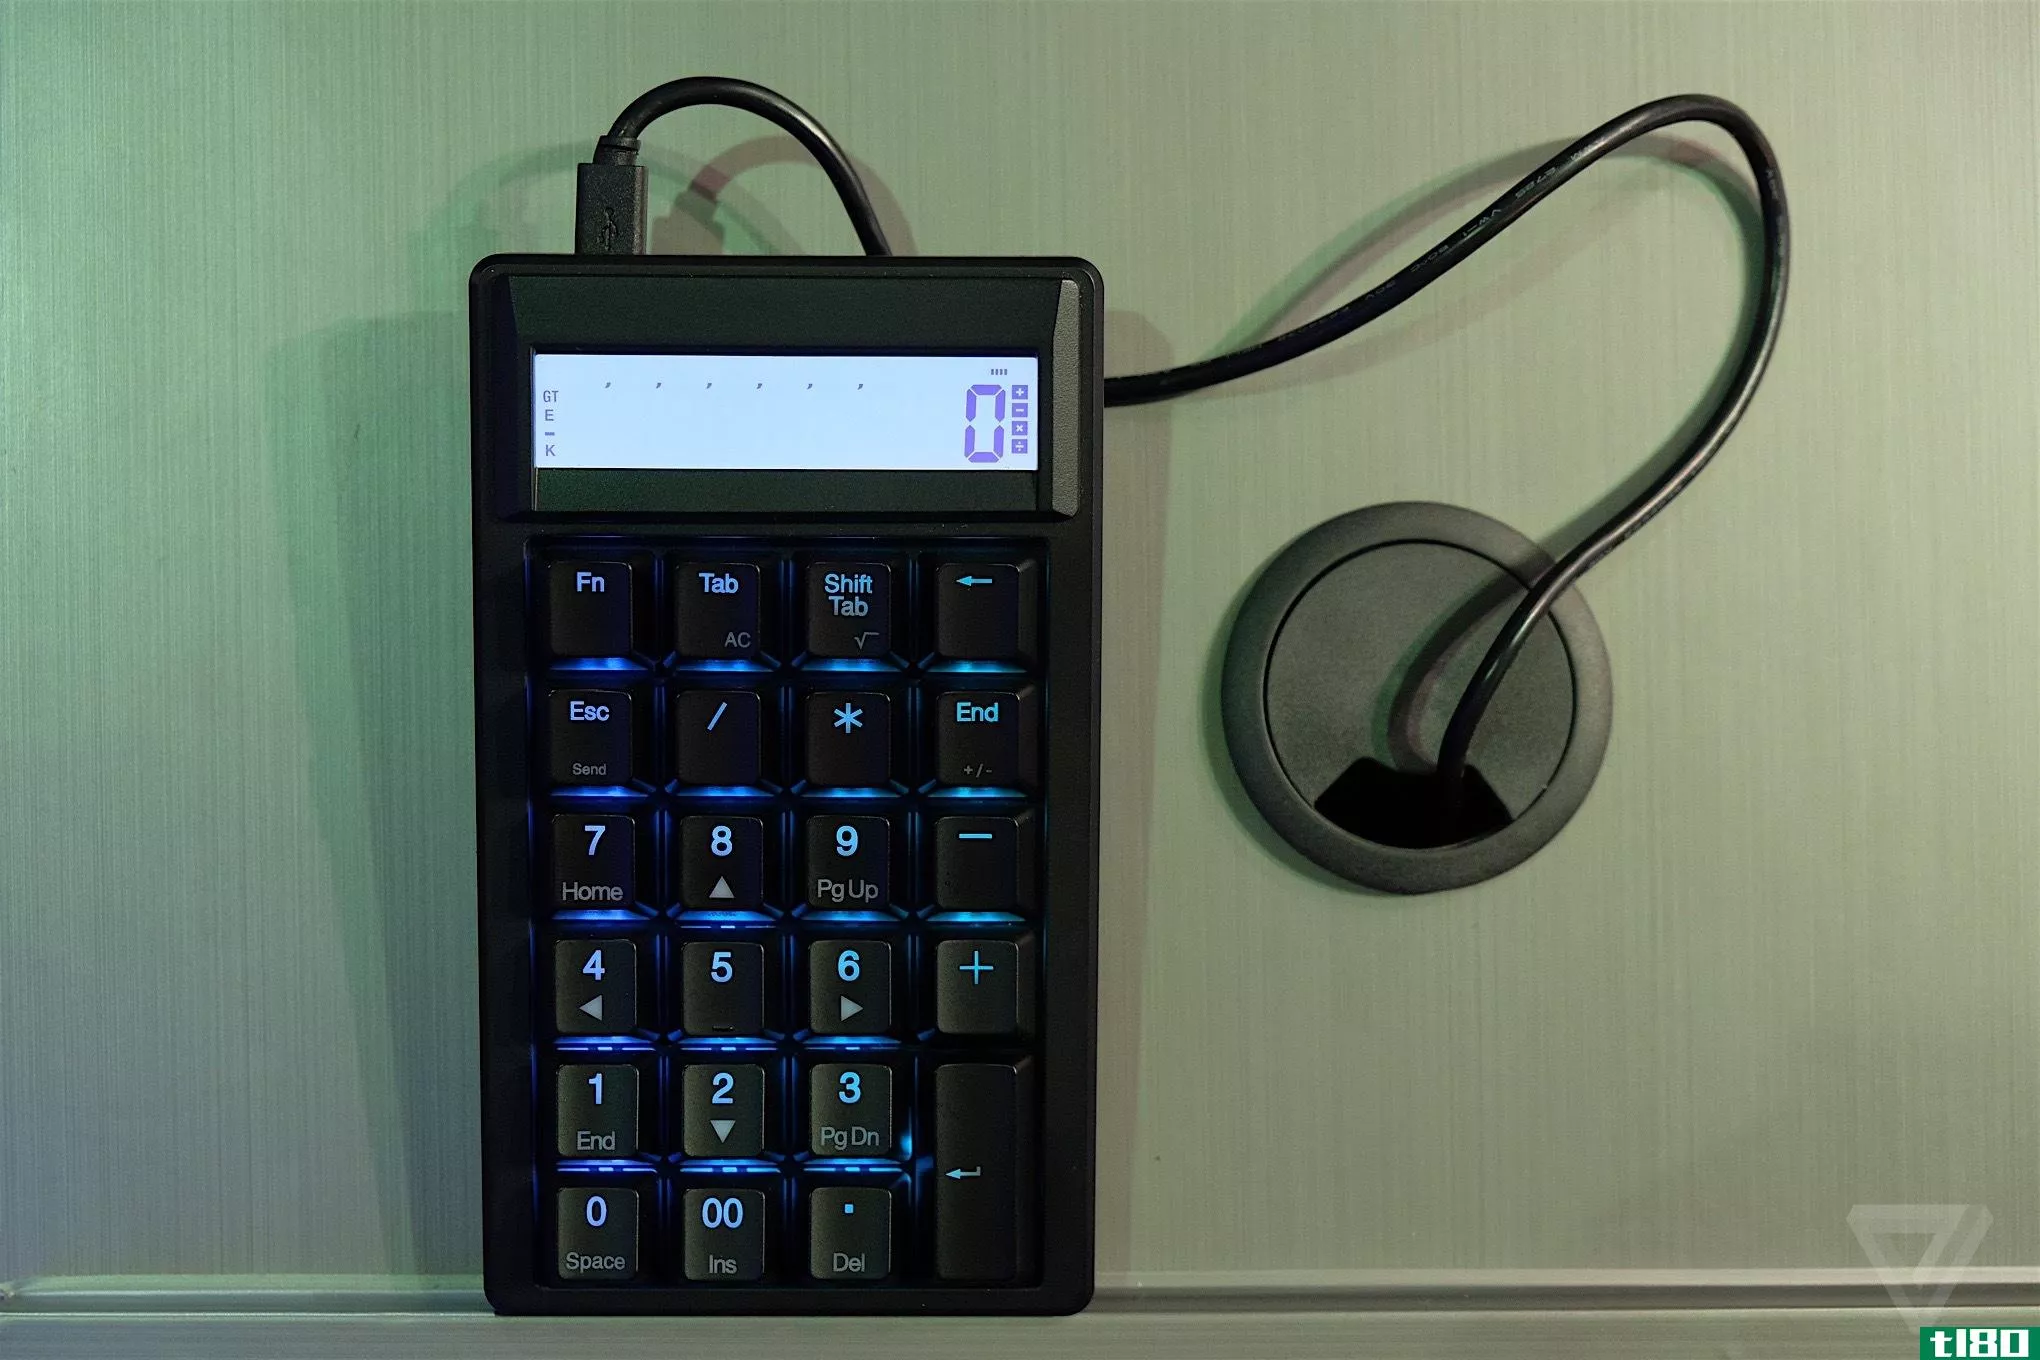 ducky pocket是一款带有cherry mx开关的机械键盘计算器